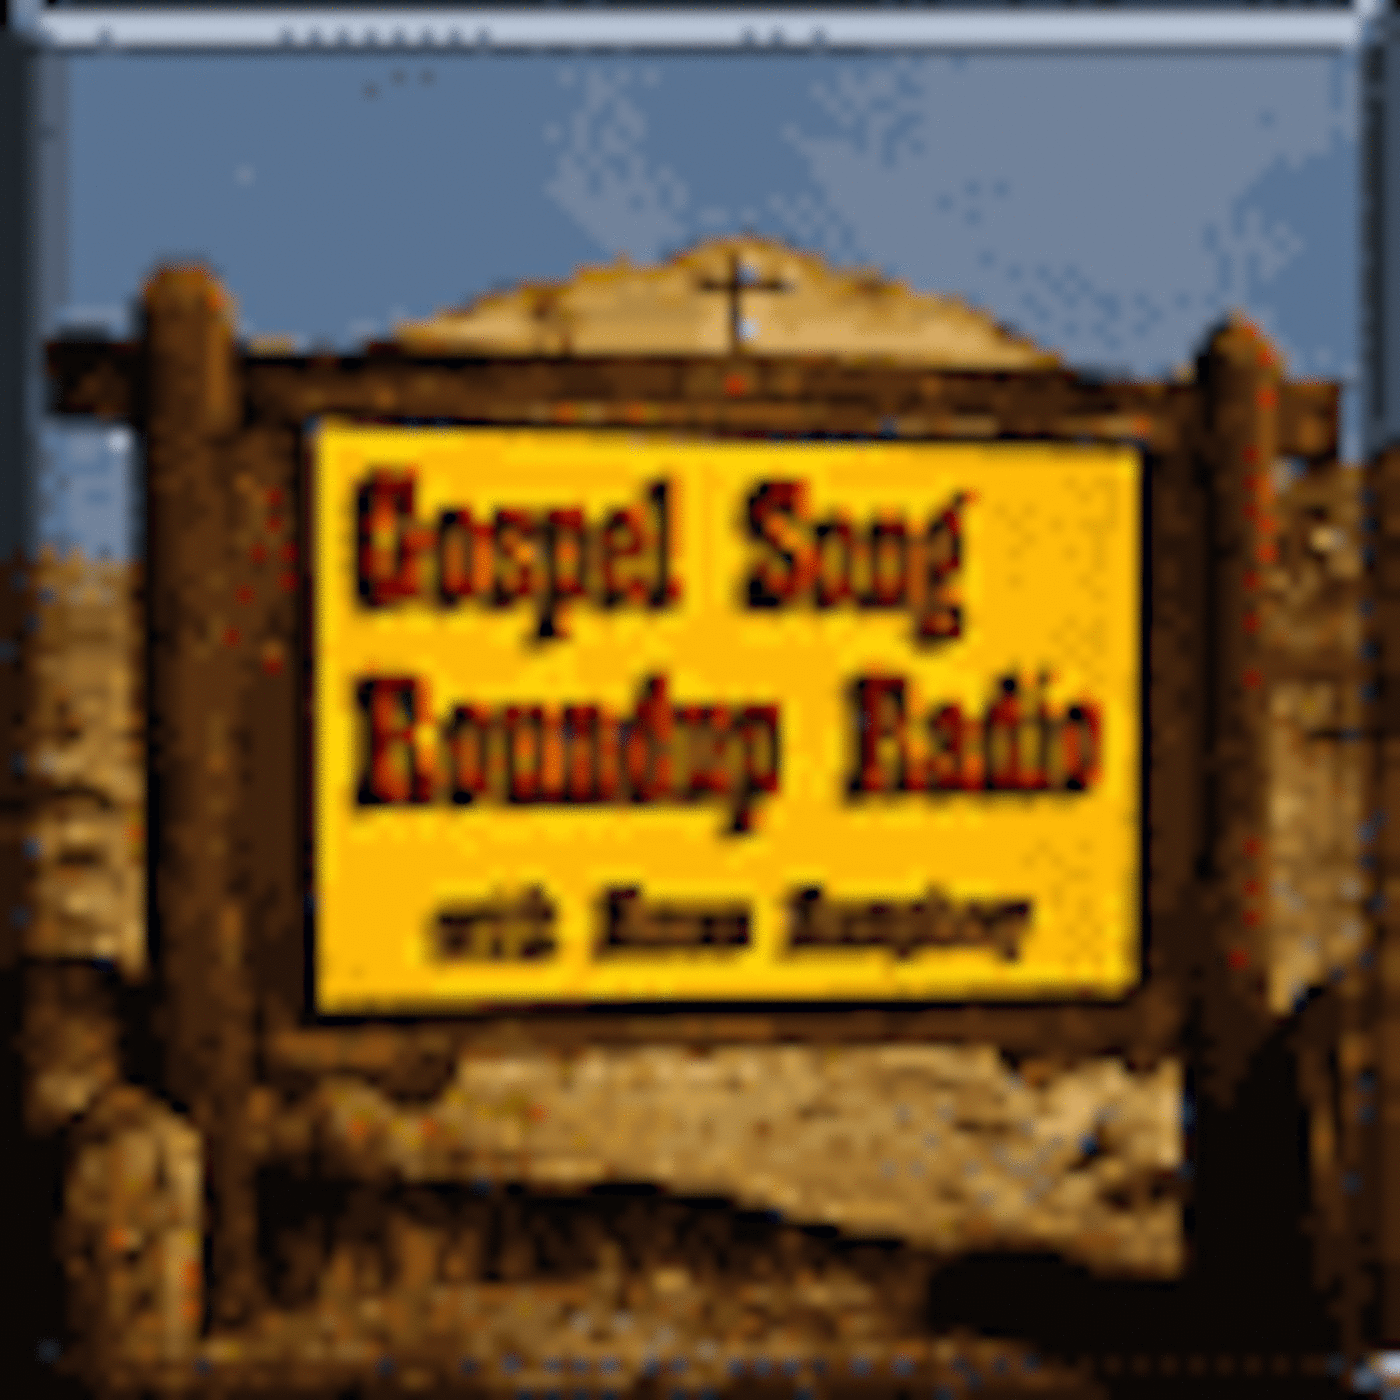 Gospel Song Roundup Radio - No. 20 Dial-up